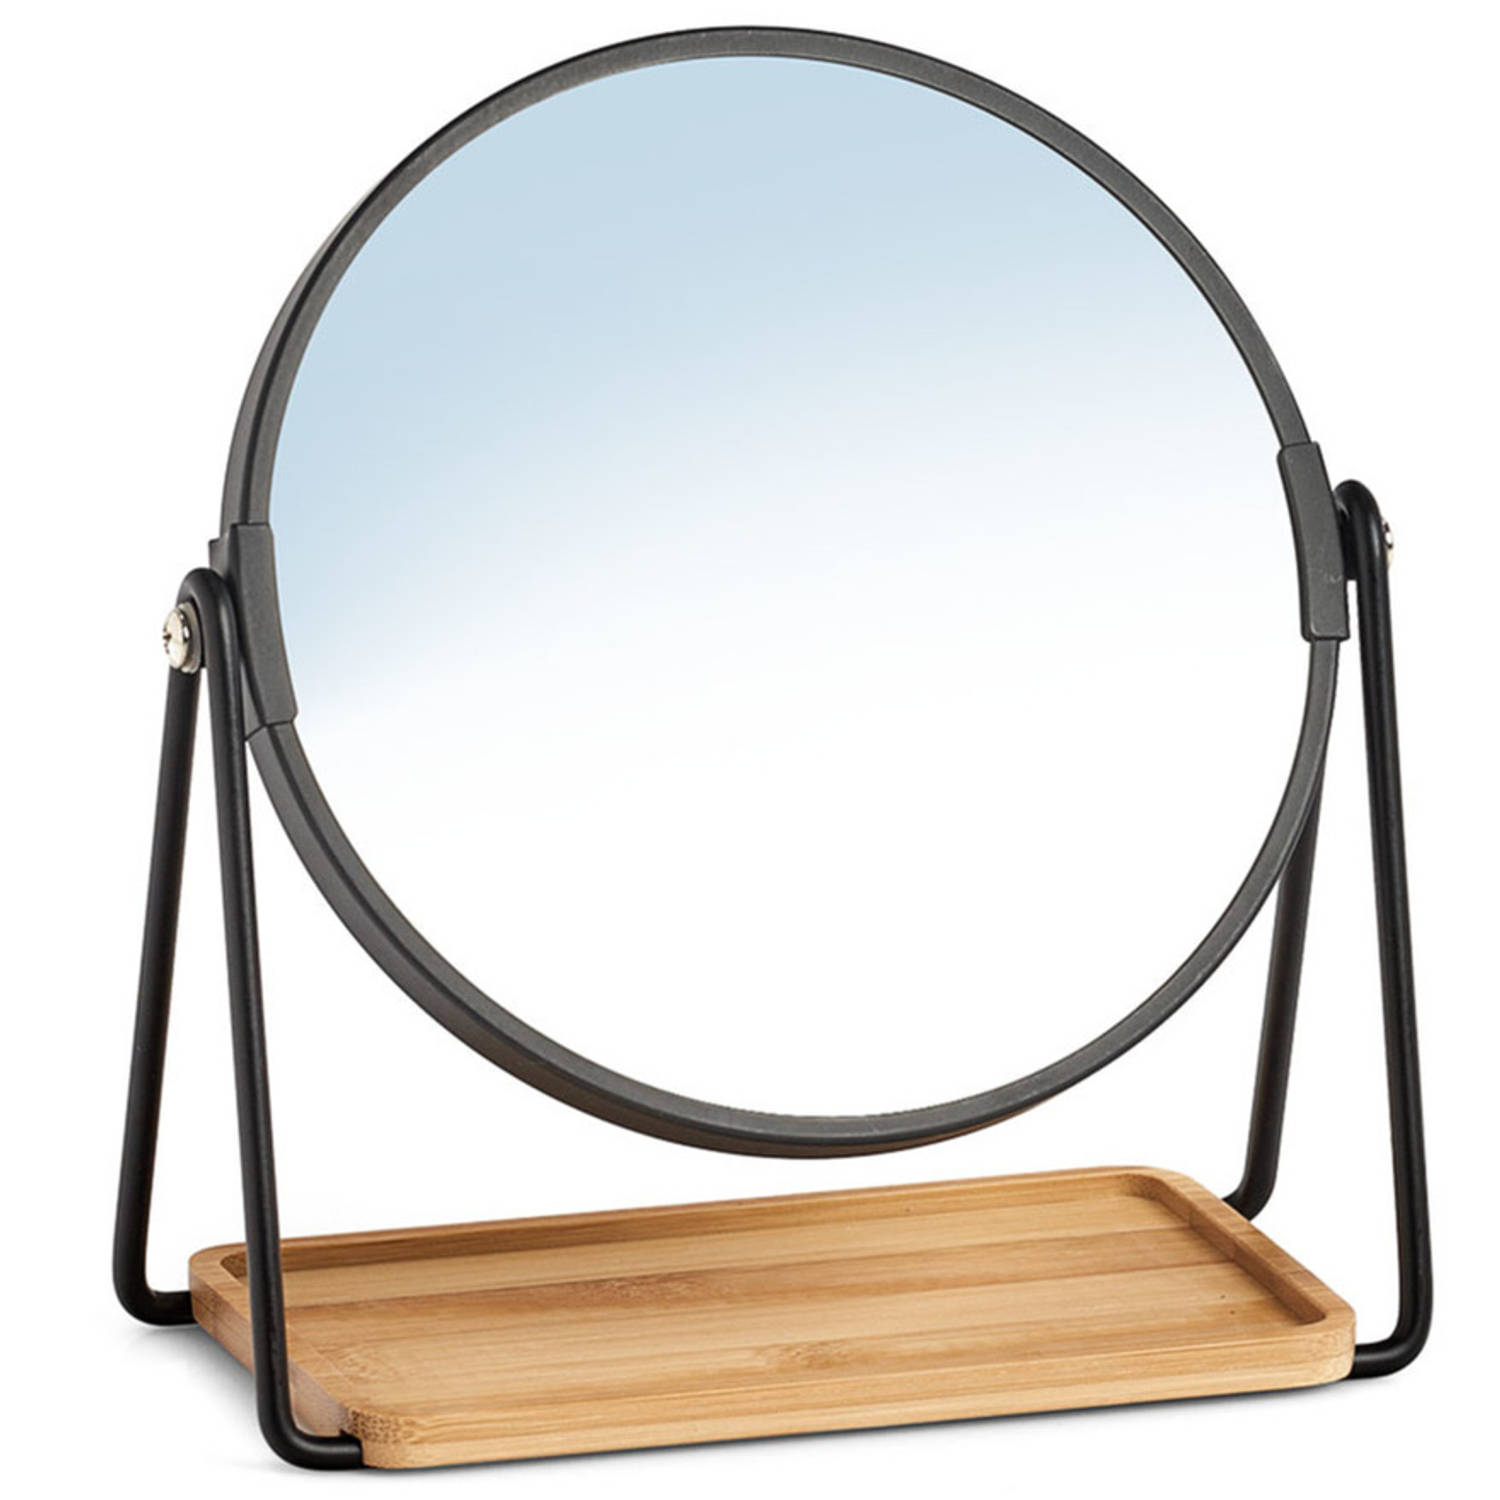 Kantine inhoud seinpaal Make-up spiegel metaal/bamboe 17,5 x 20,5 cm - Make-up spiegeltjes | Blokker